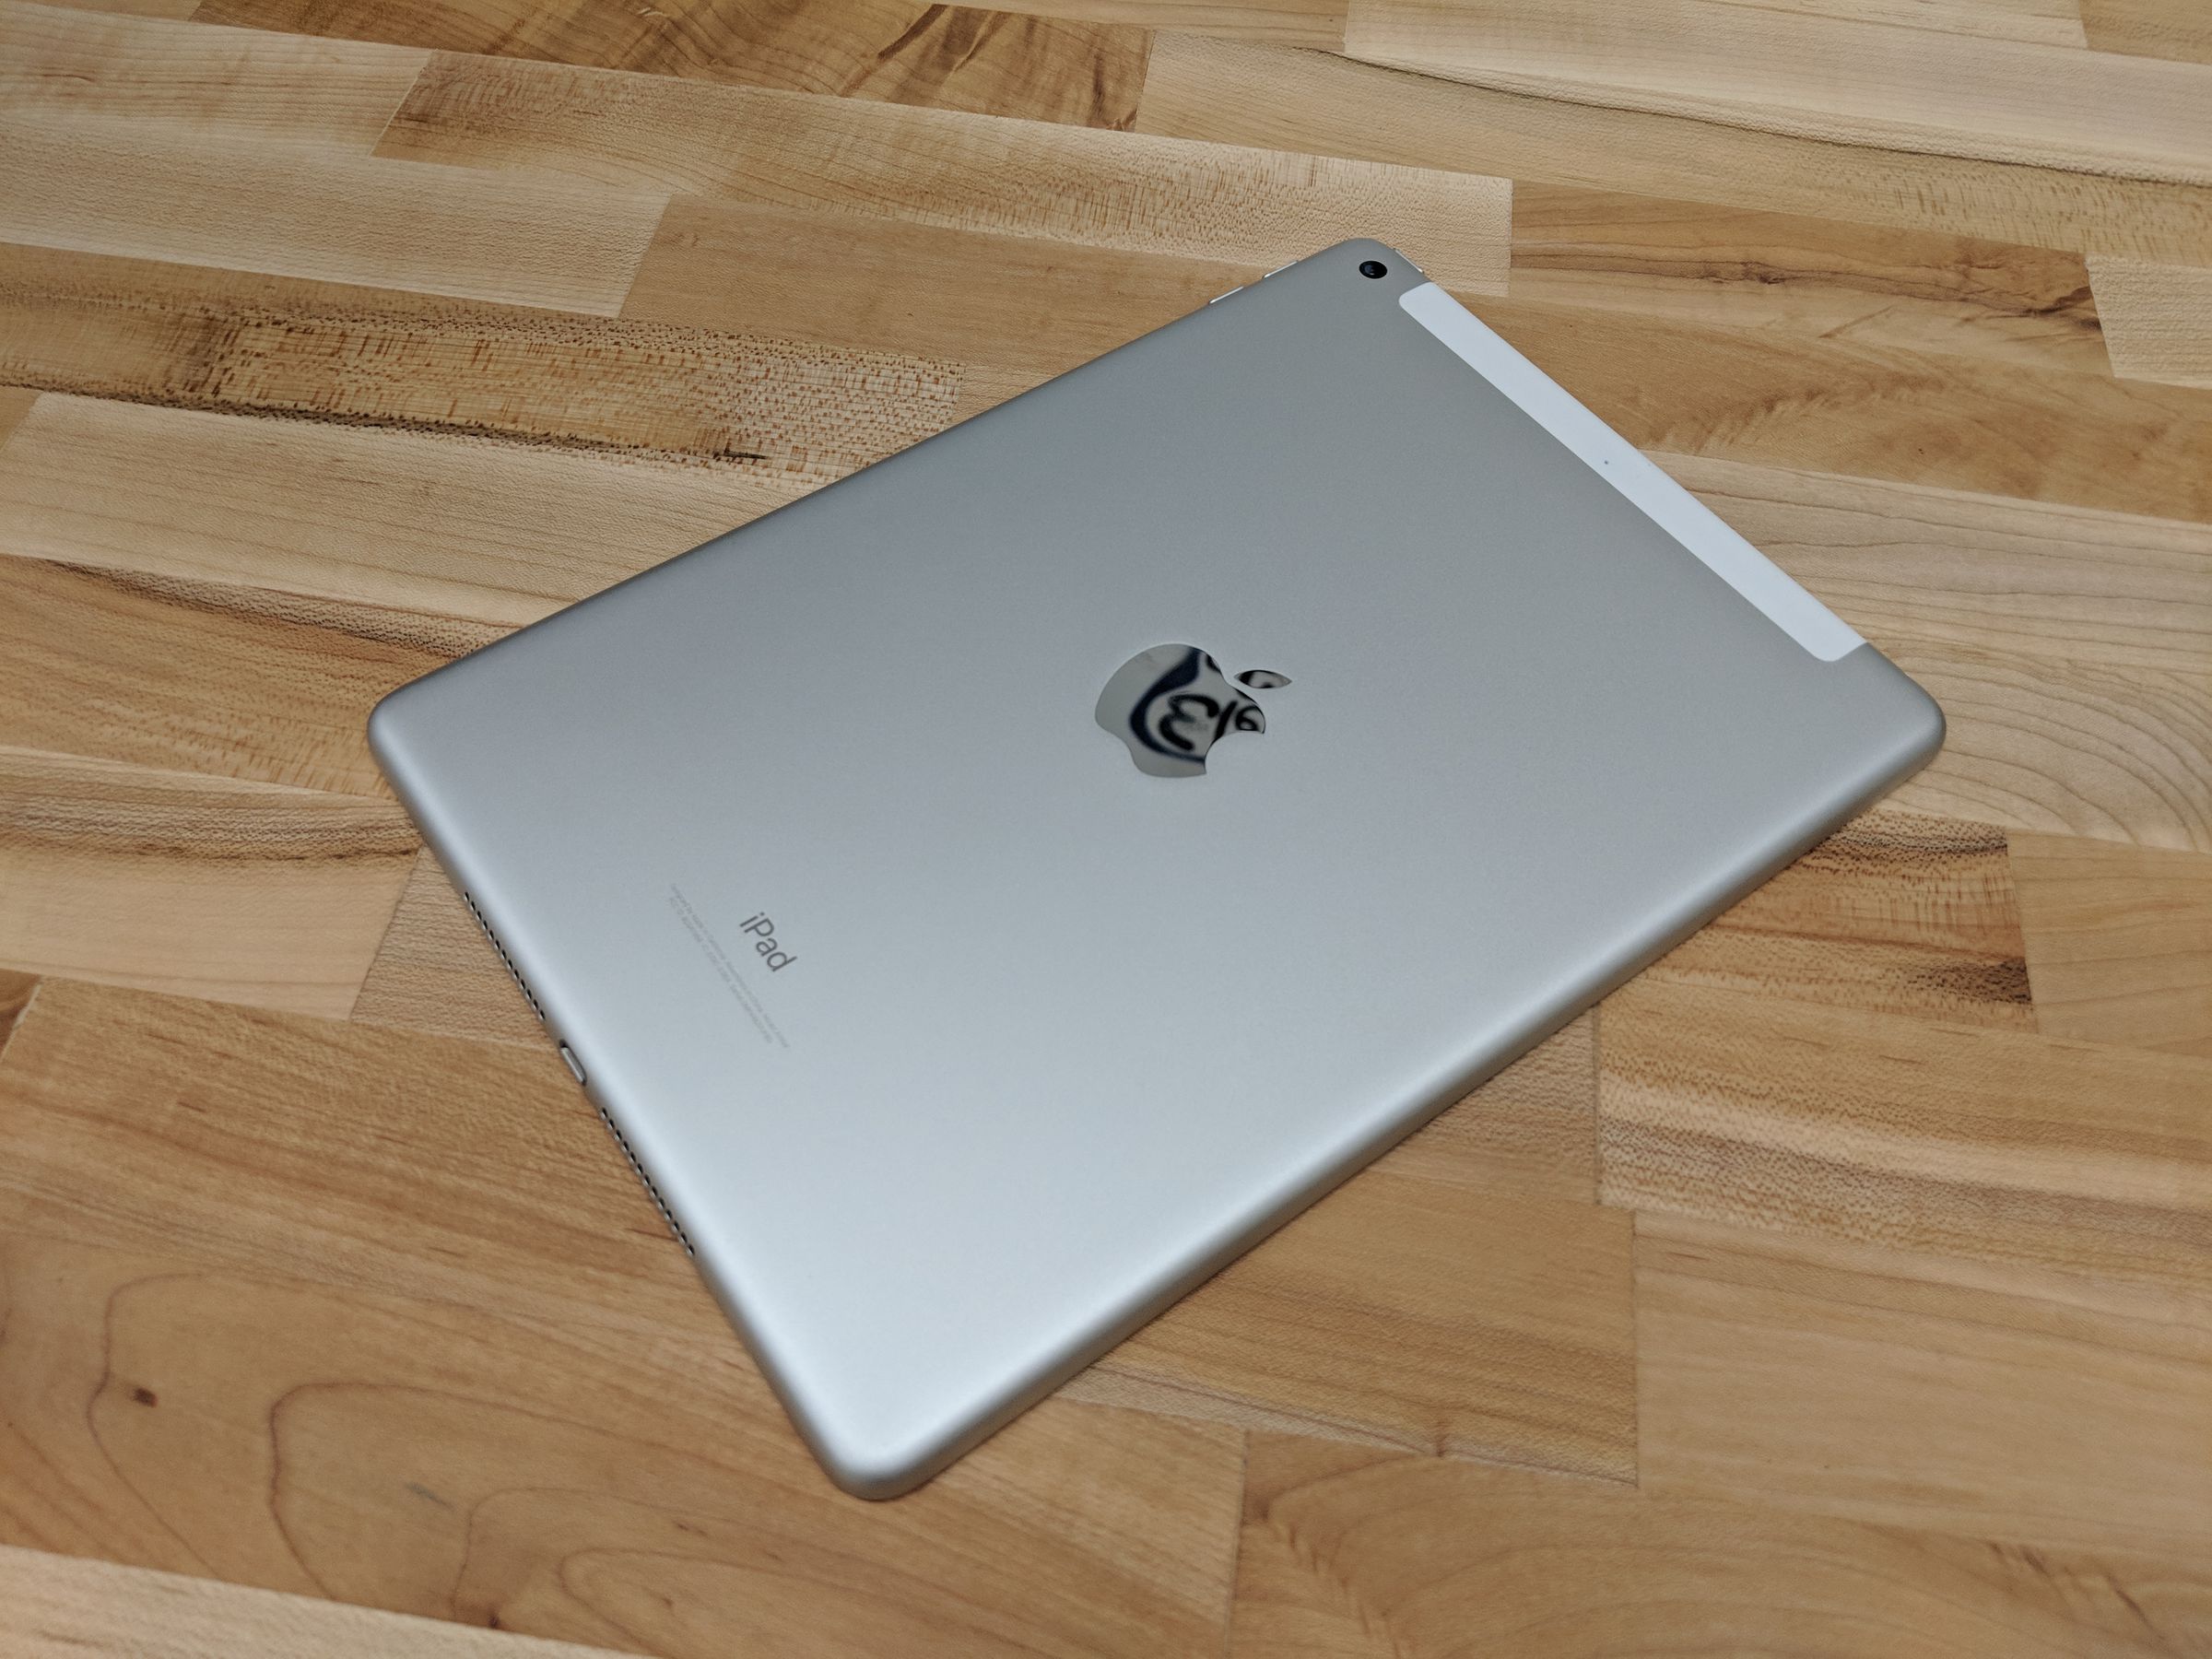 Apple’s new iPad